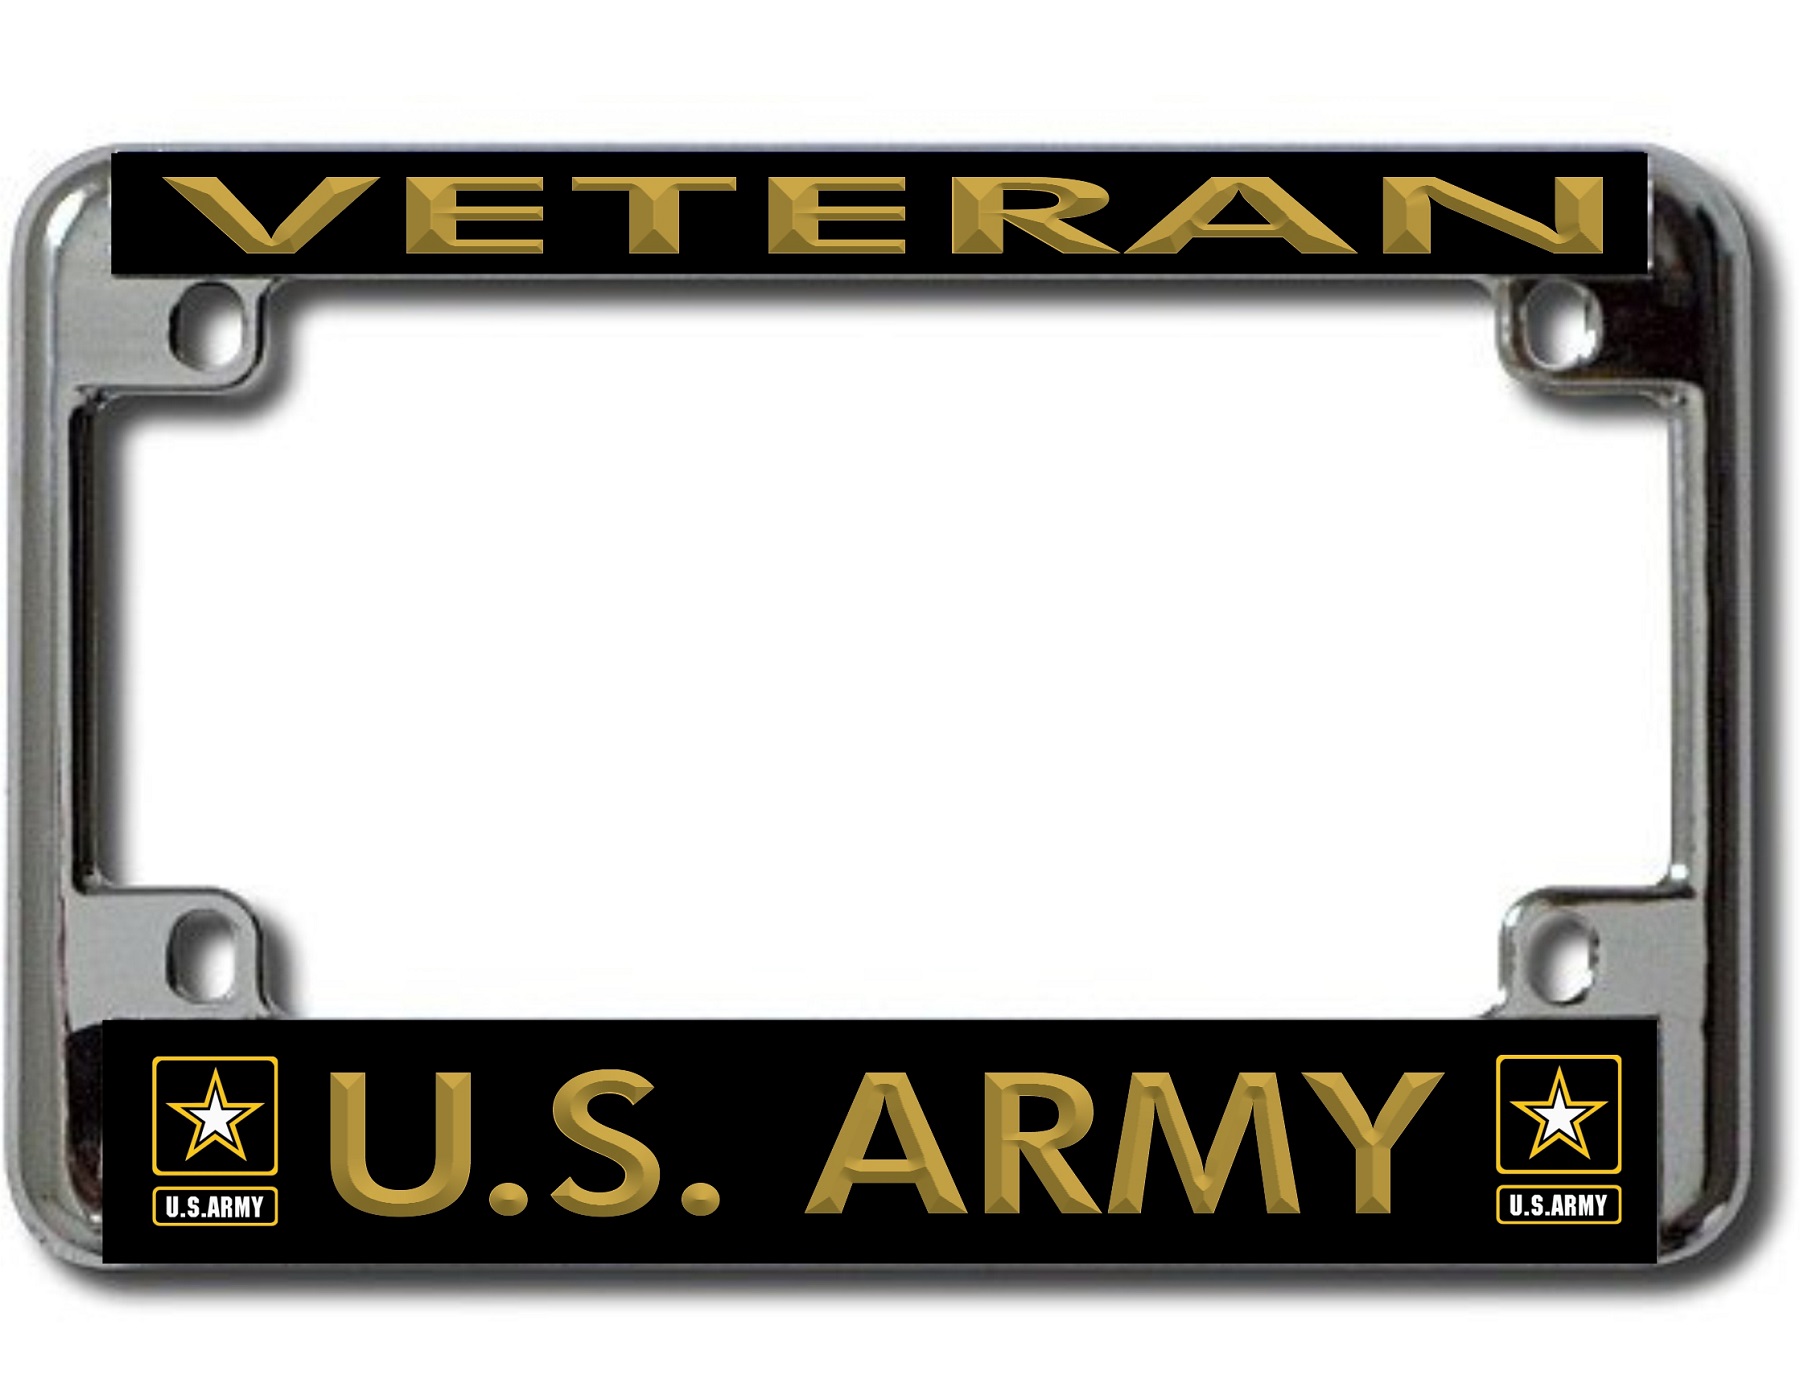 Veteran U.S. Army Chrome Motorcycle License Plate FRAME